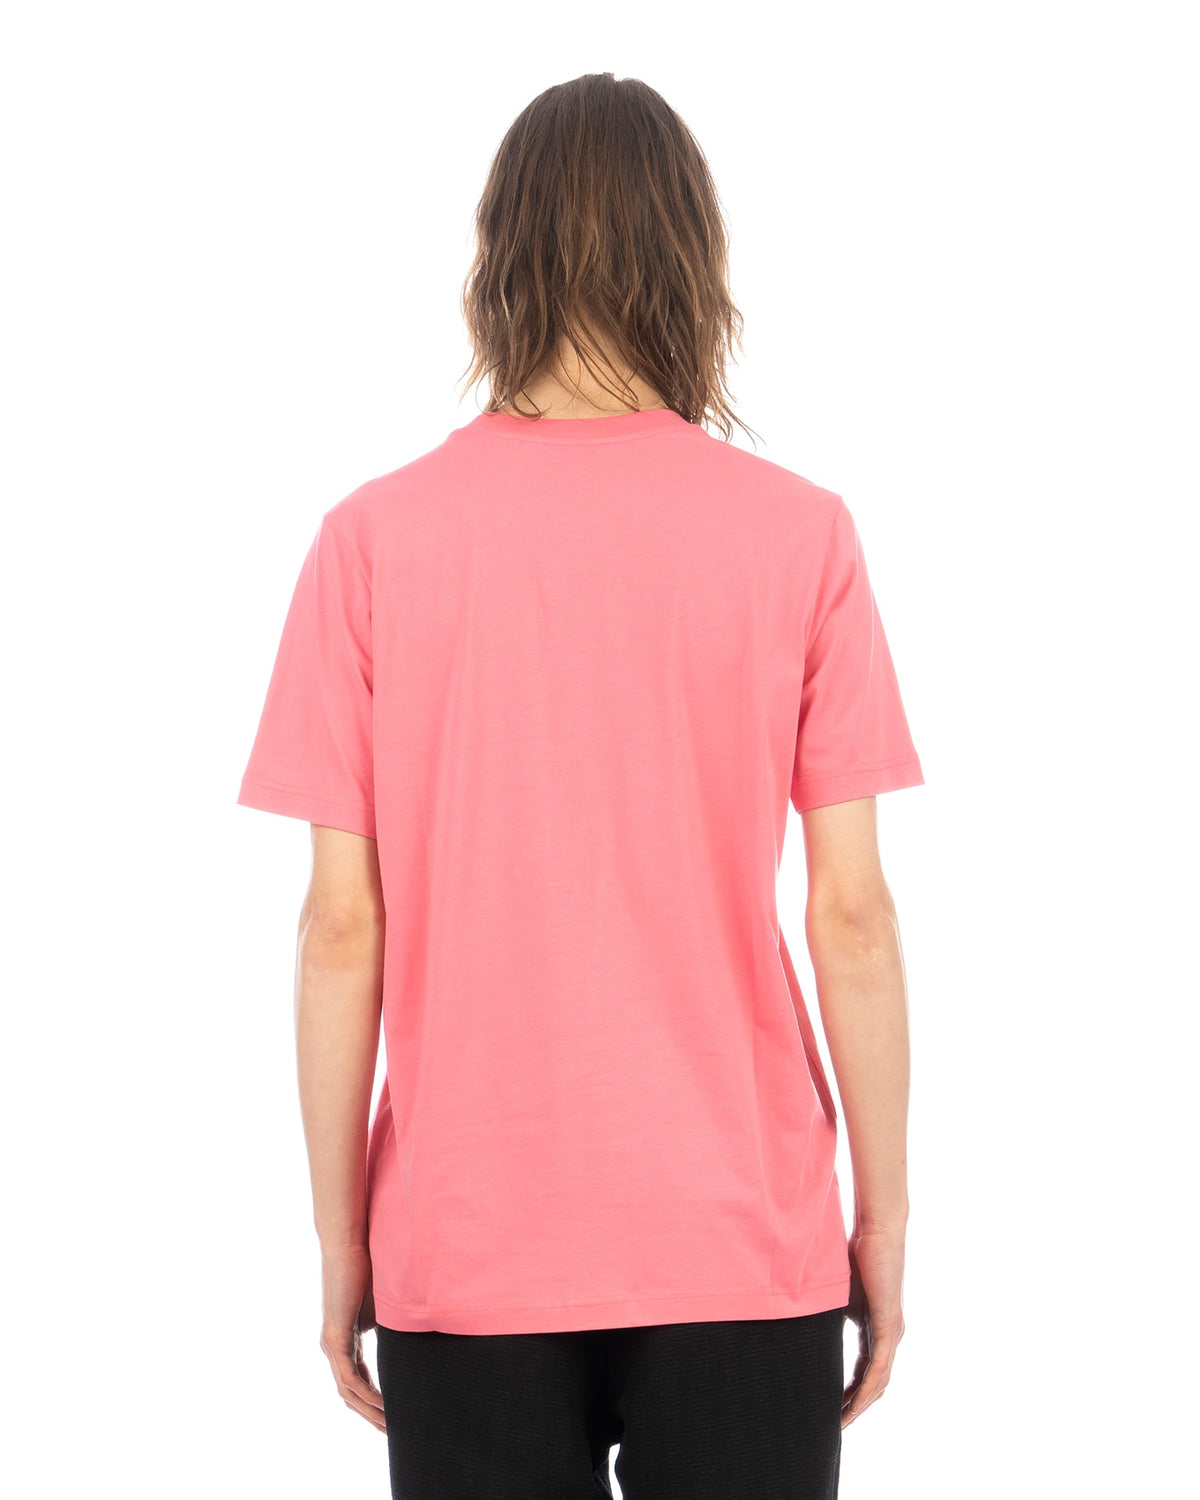 Marni | Logo T-Shirt Pink Candy - Concrete